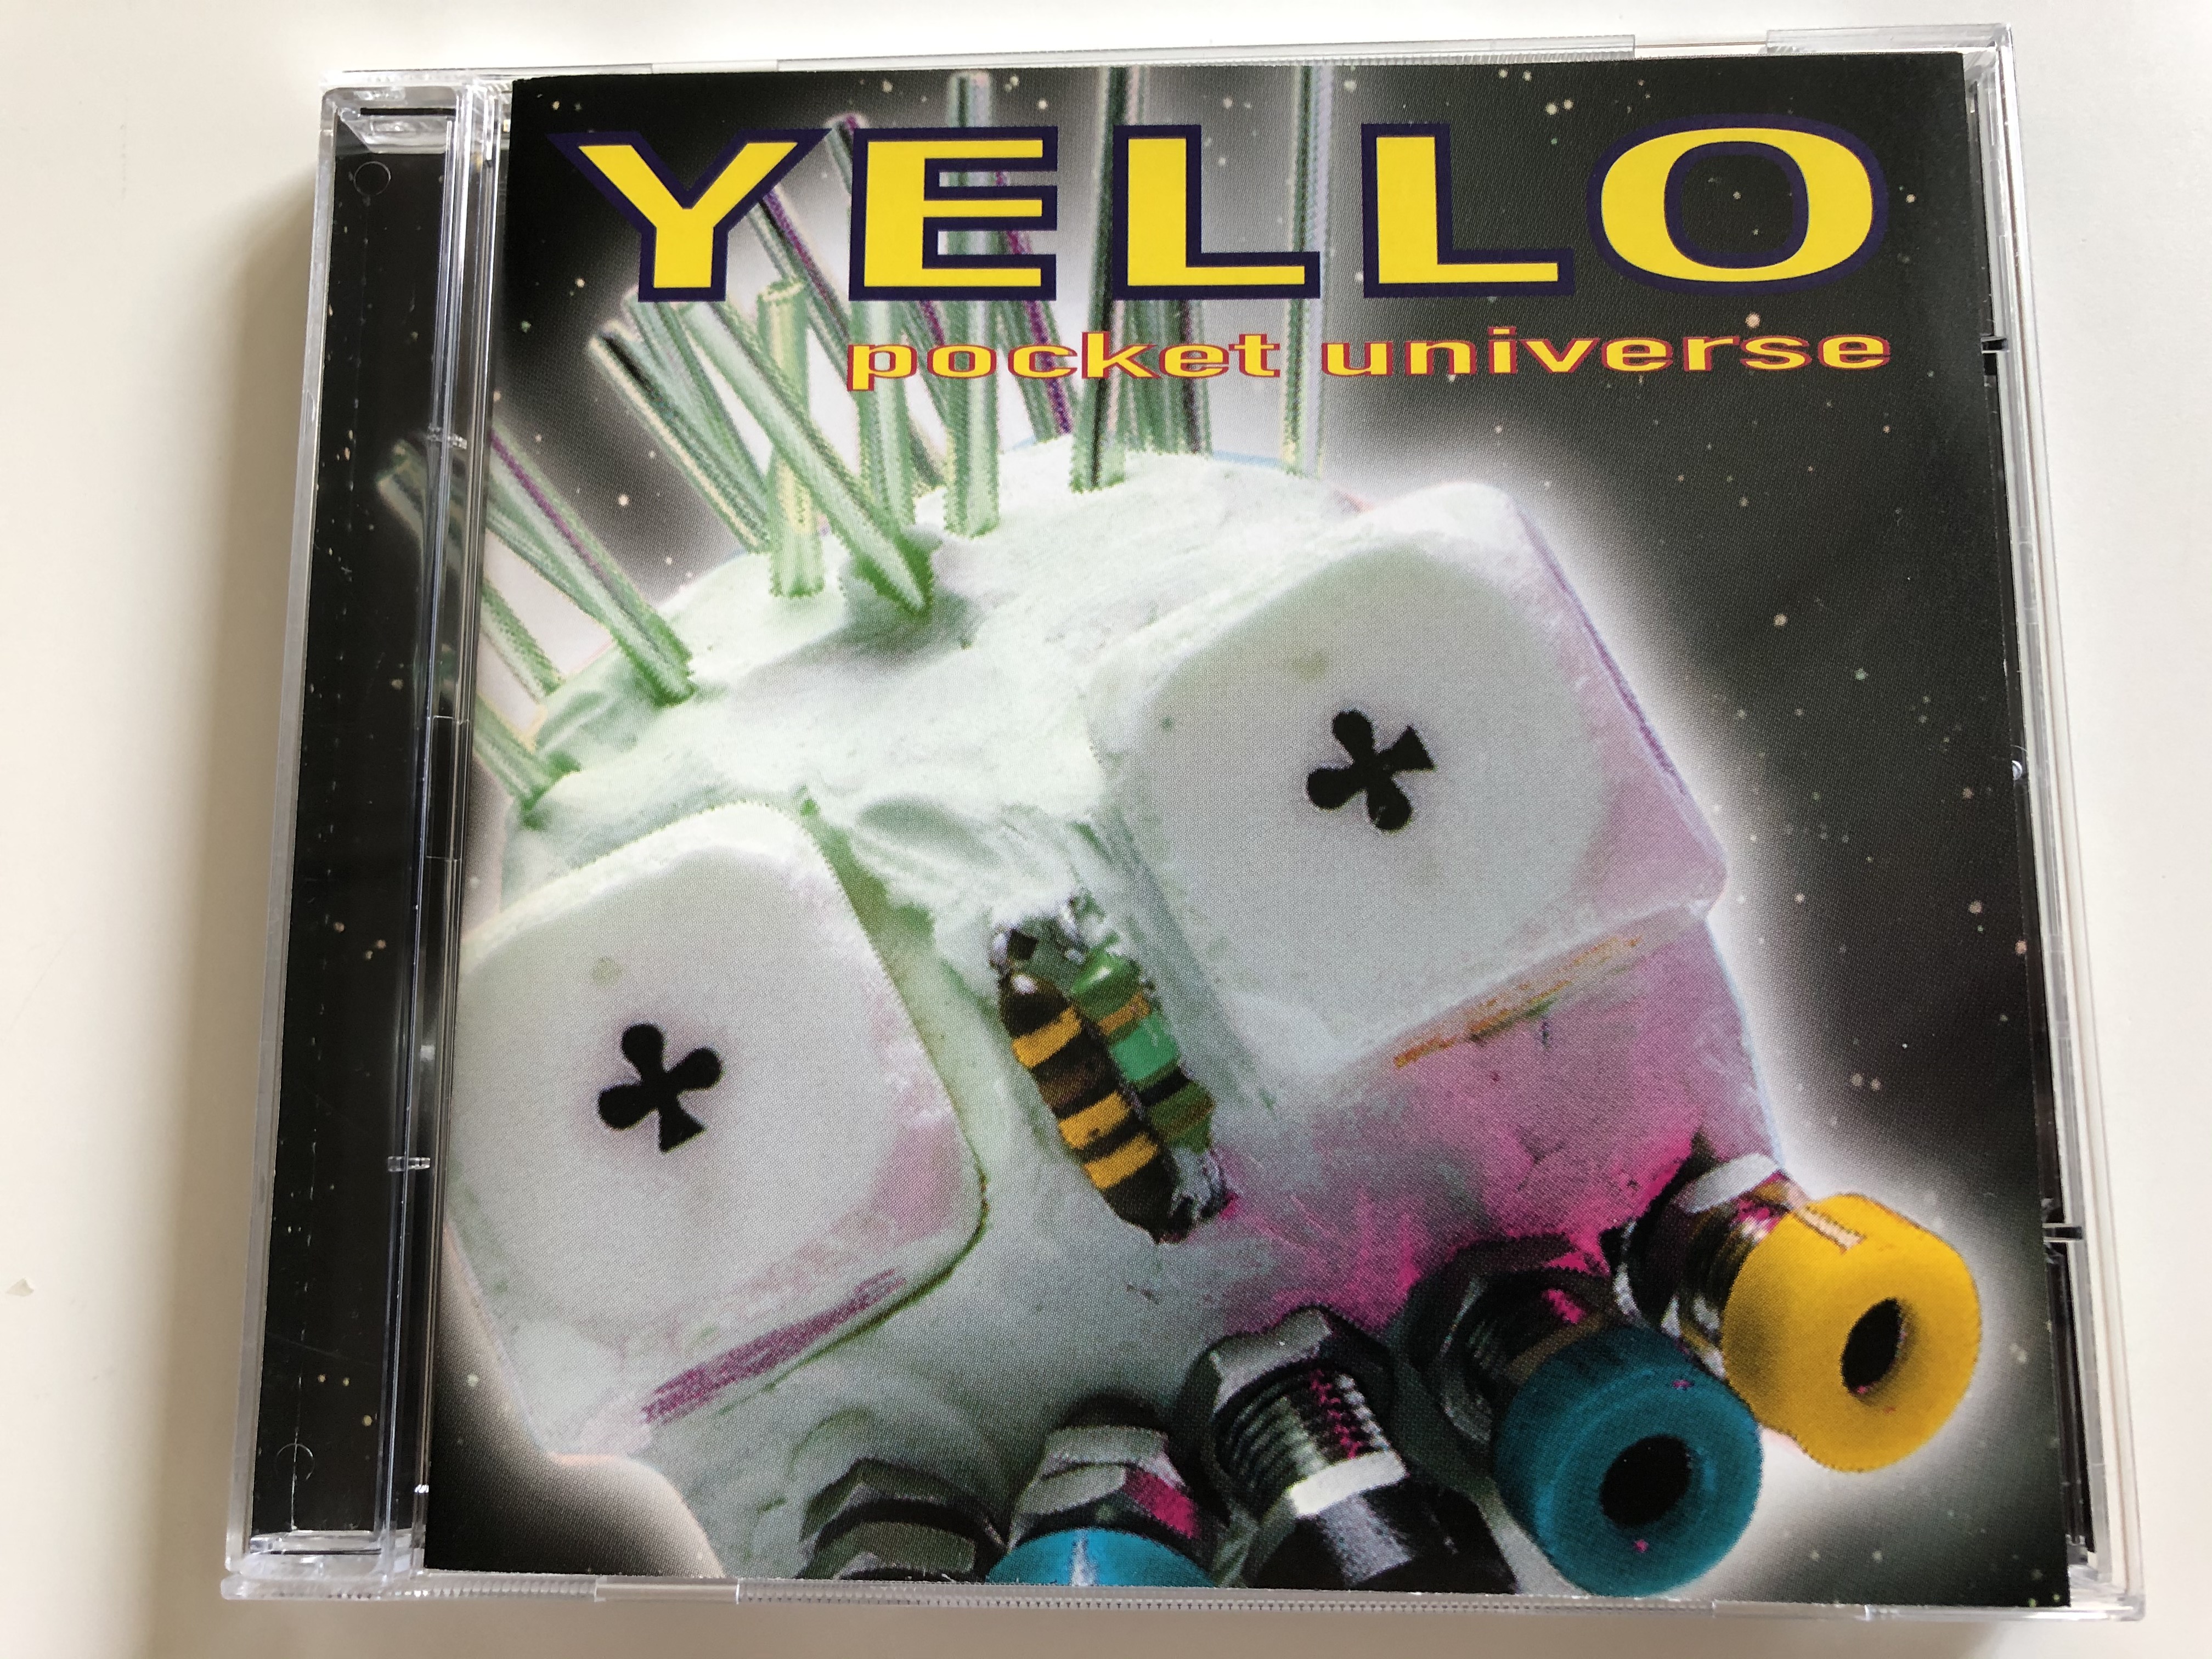 yello-pocket-universe-mercury-audio-cd-1997-534-353-2-1-.jpg